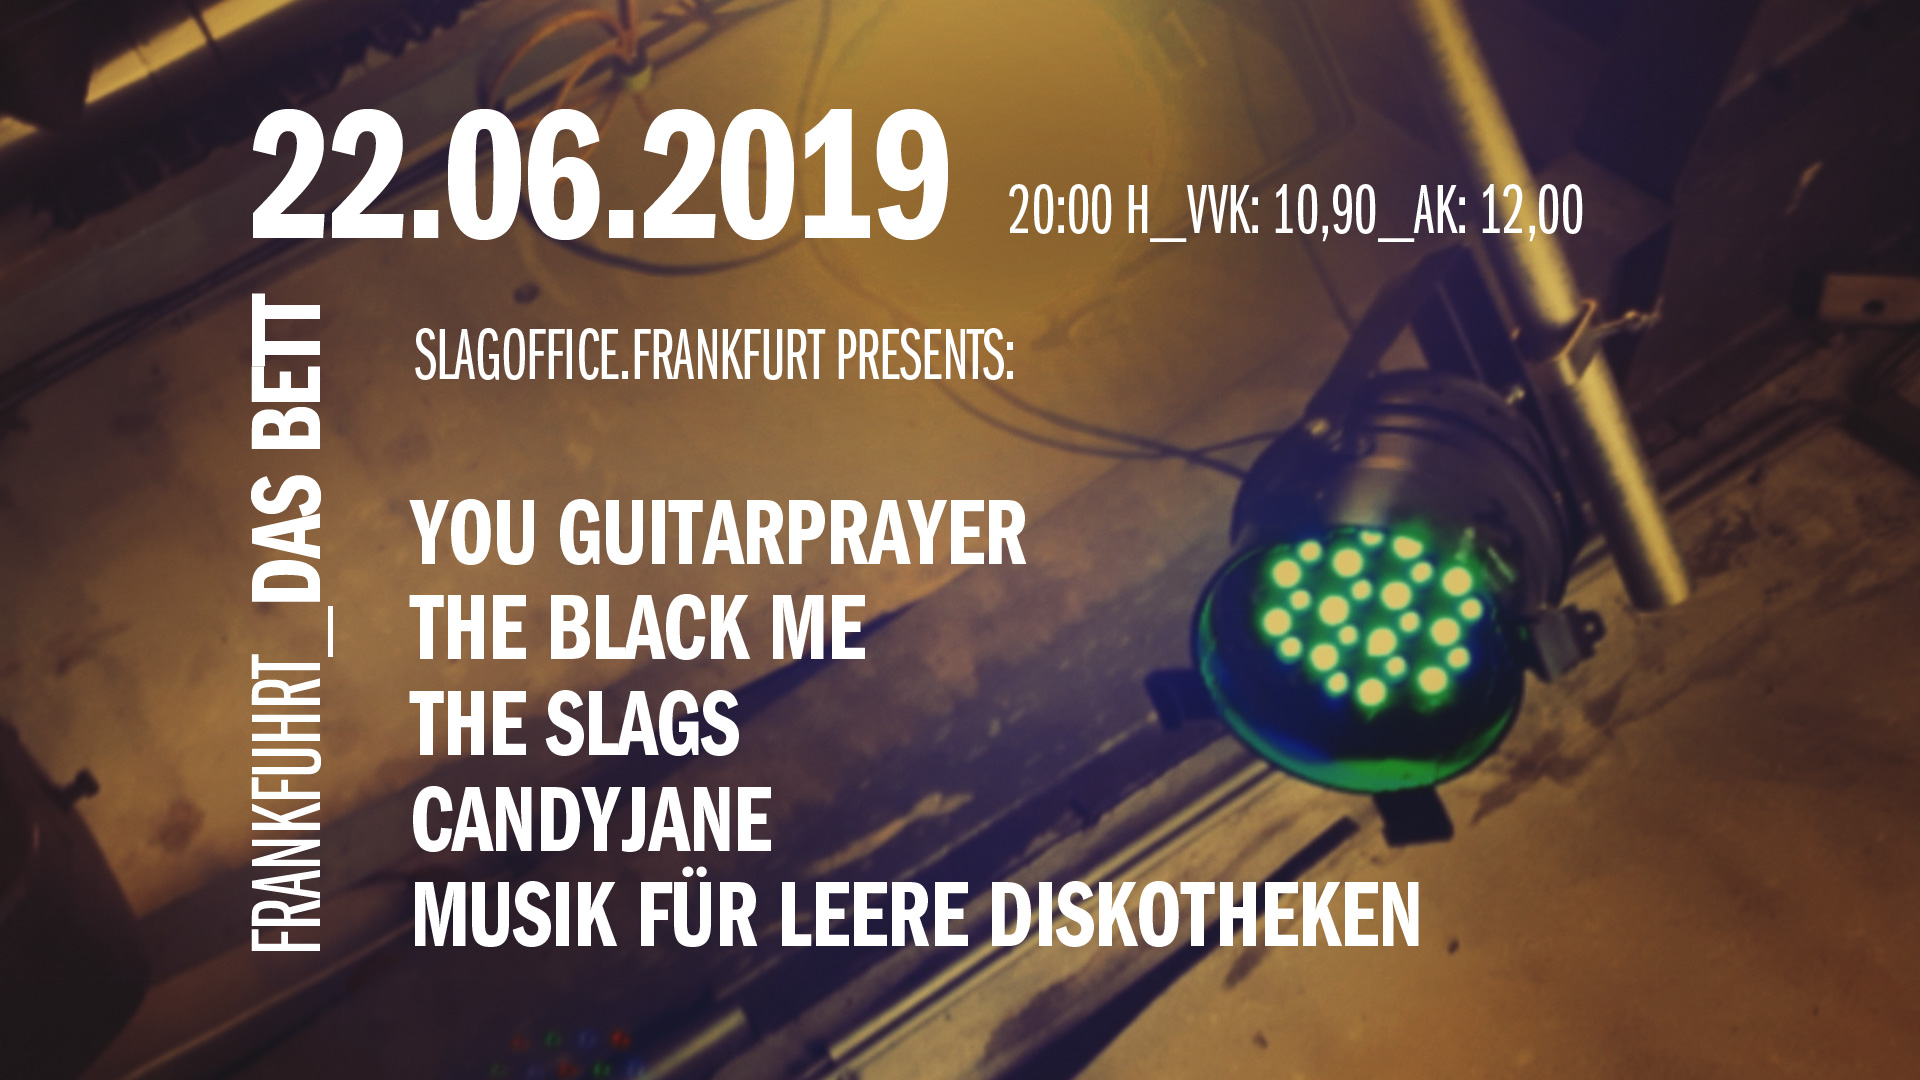 SLAGOFFICE.FRANKFURT presents: You Guitarprayer, The Black Me, The Slags, Candyjane & Musik Für Leere Diskotheken